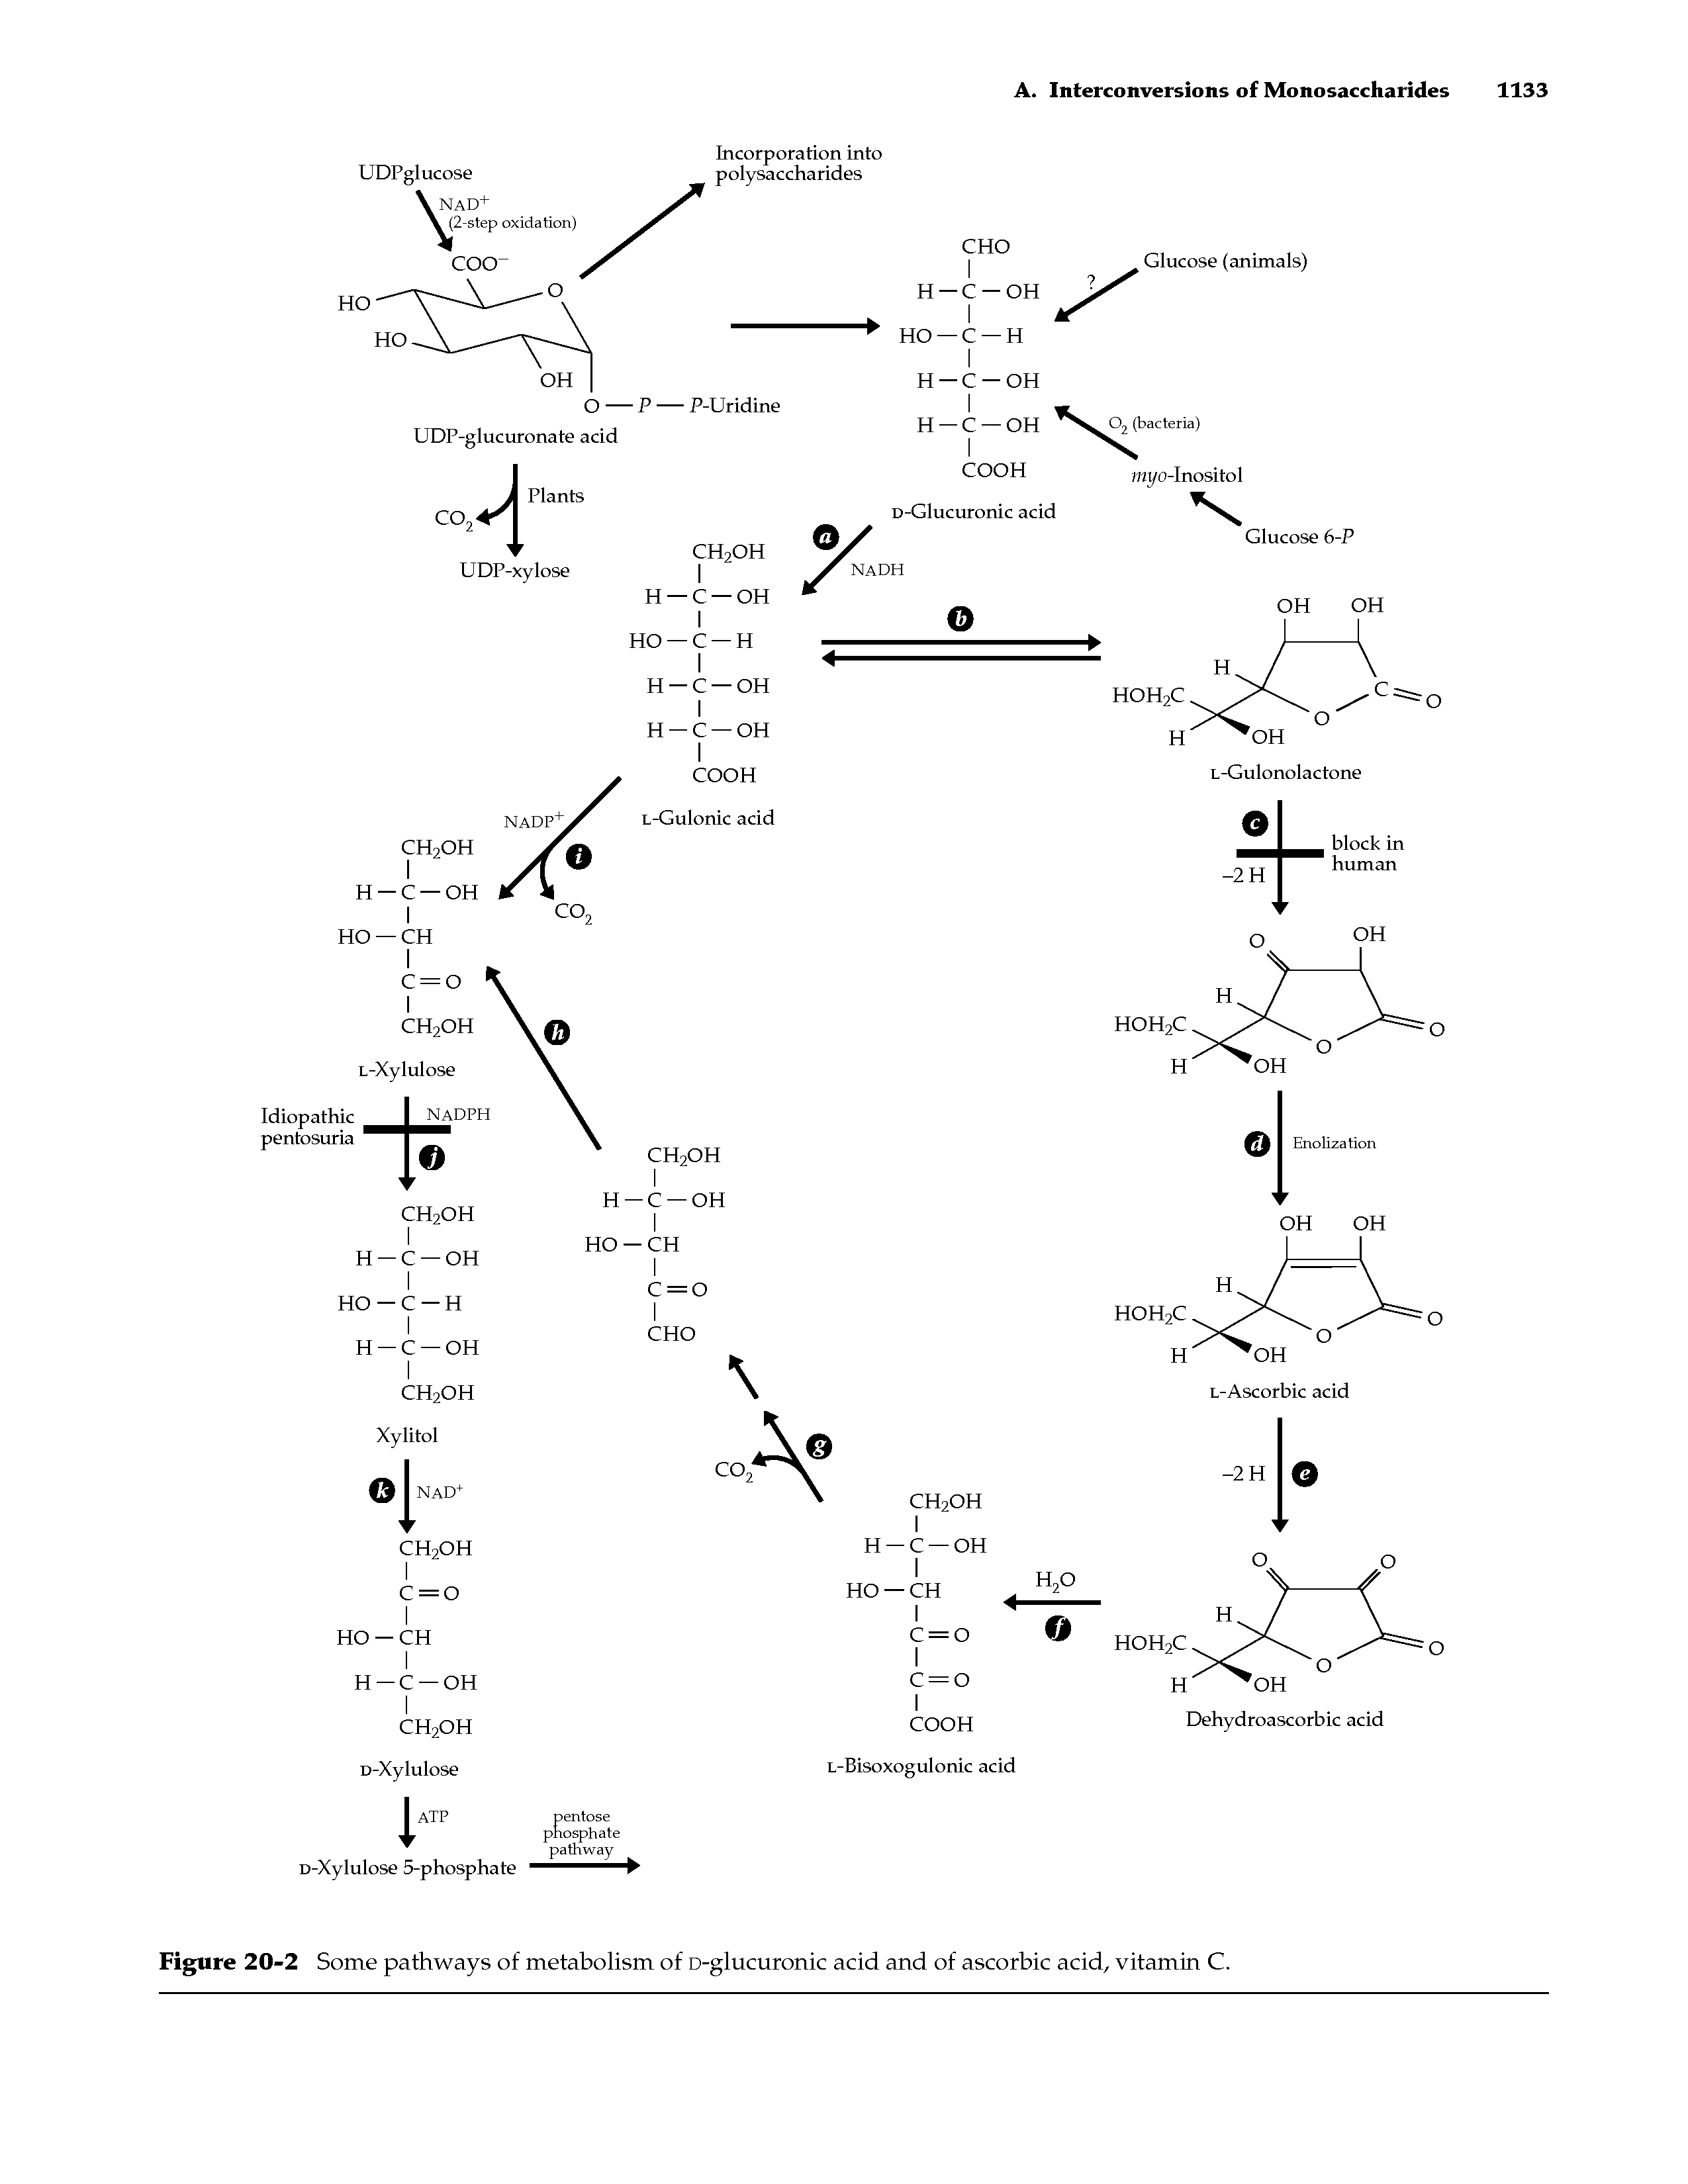 Figure 20-2 Some pathways of metabolism of D-glucuronic acid and of ascorbic acid, vitamin C.